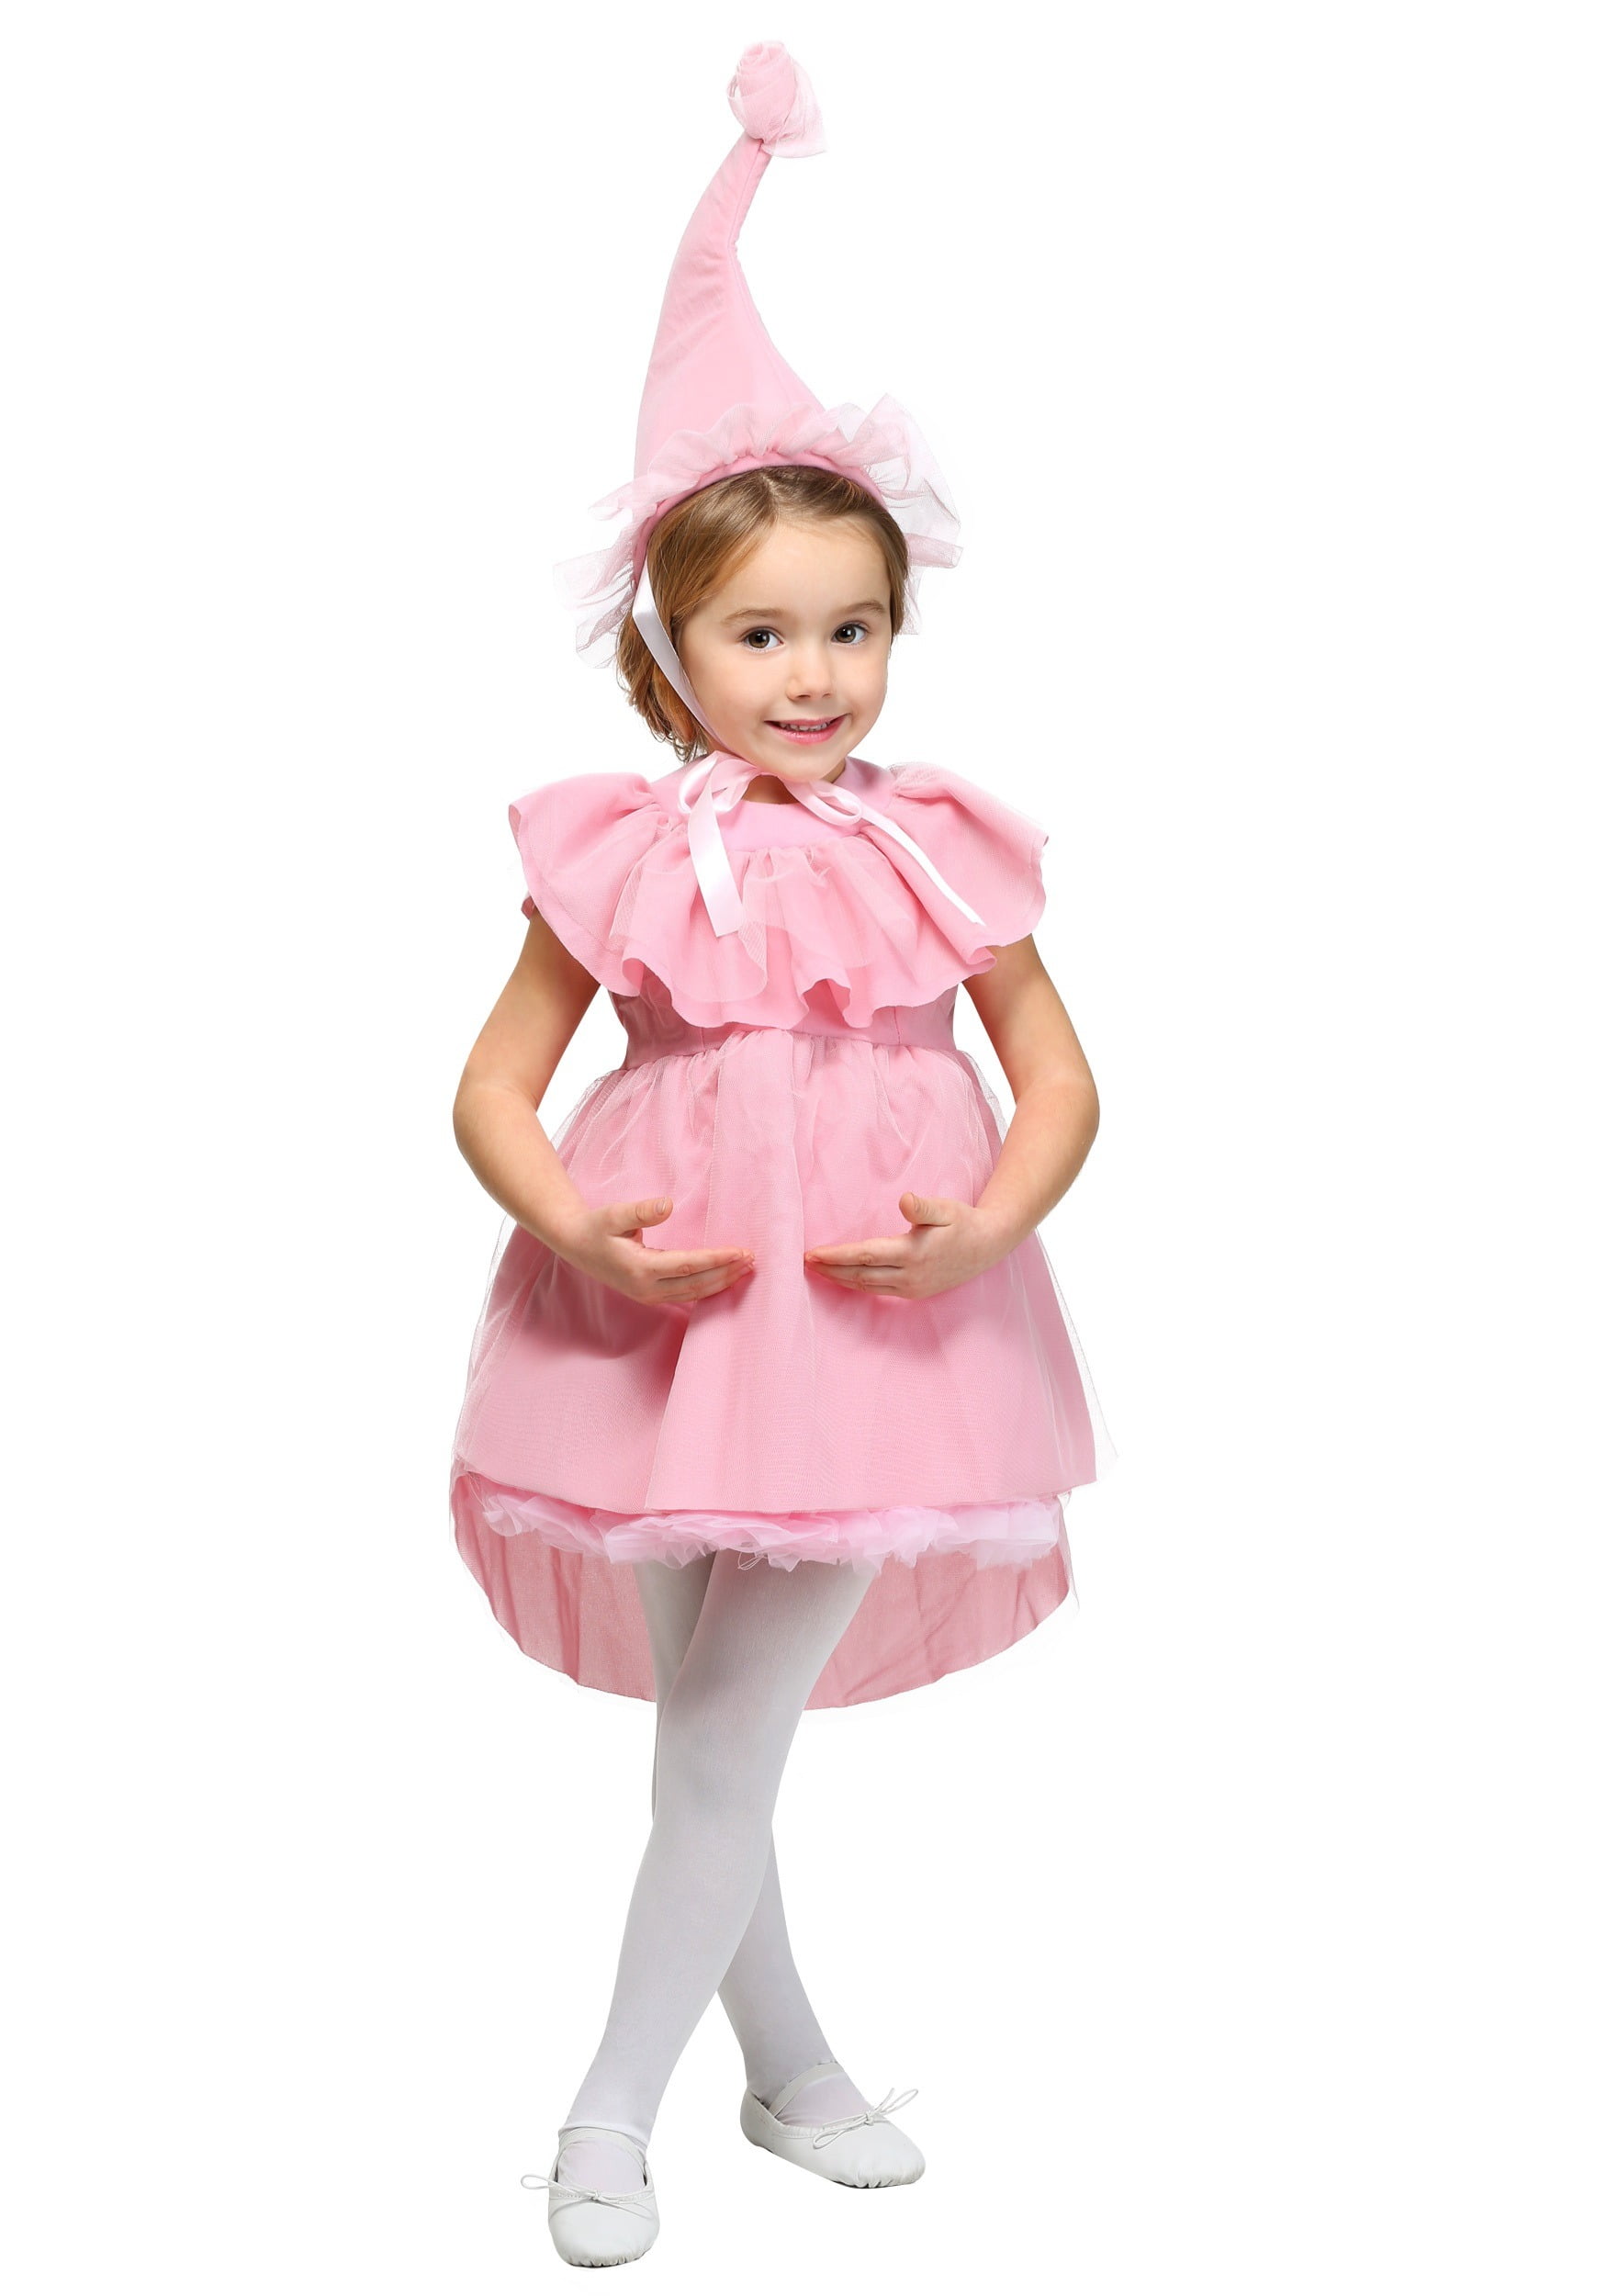 Toddler Munchkin Ballerina - Walmart.com - Walmart.com